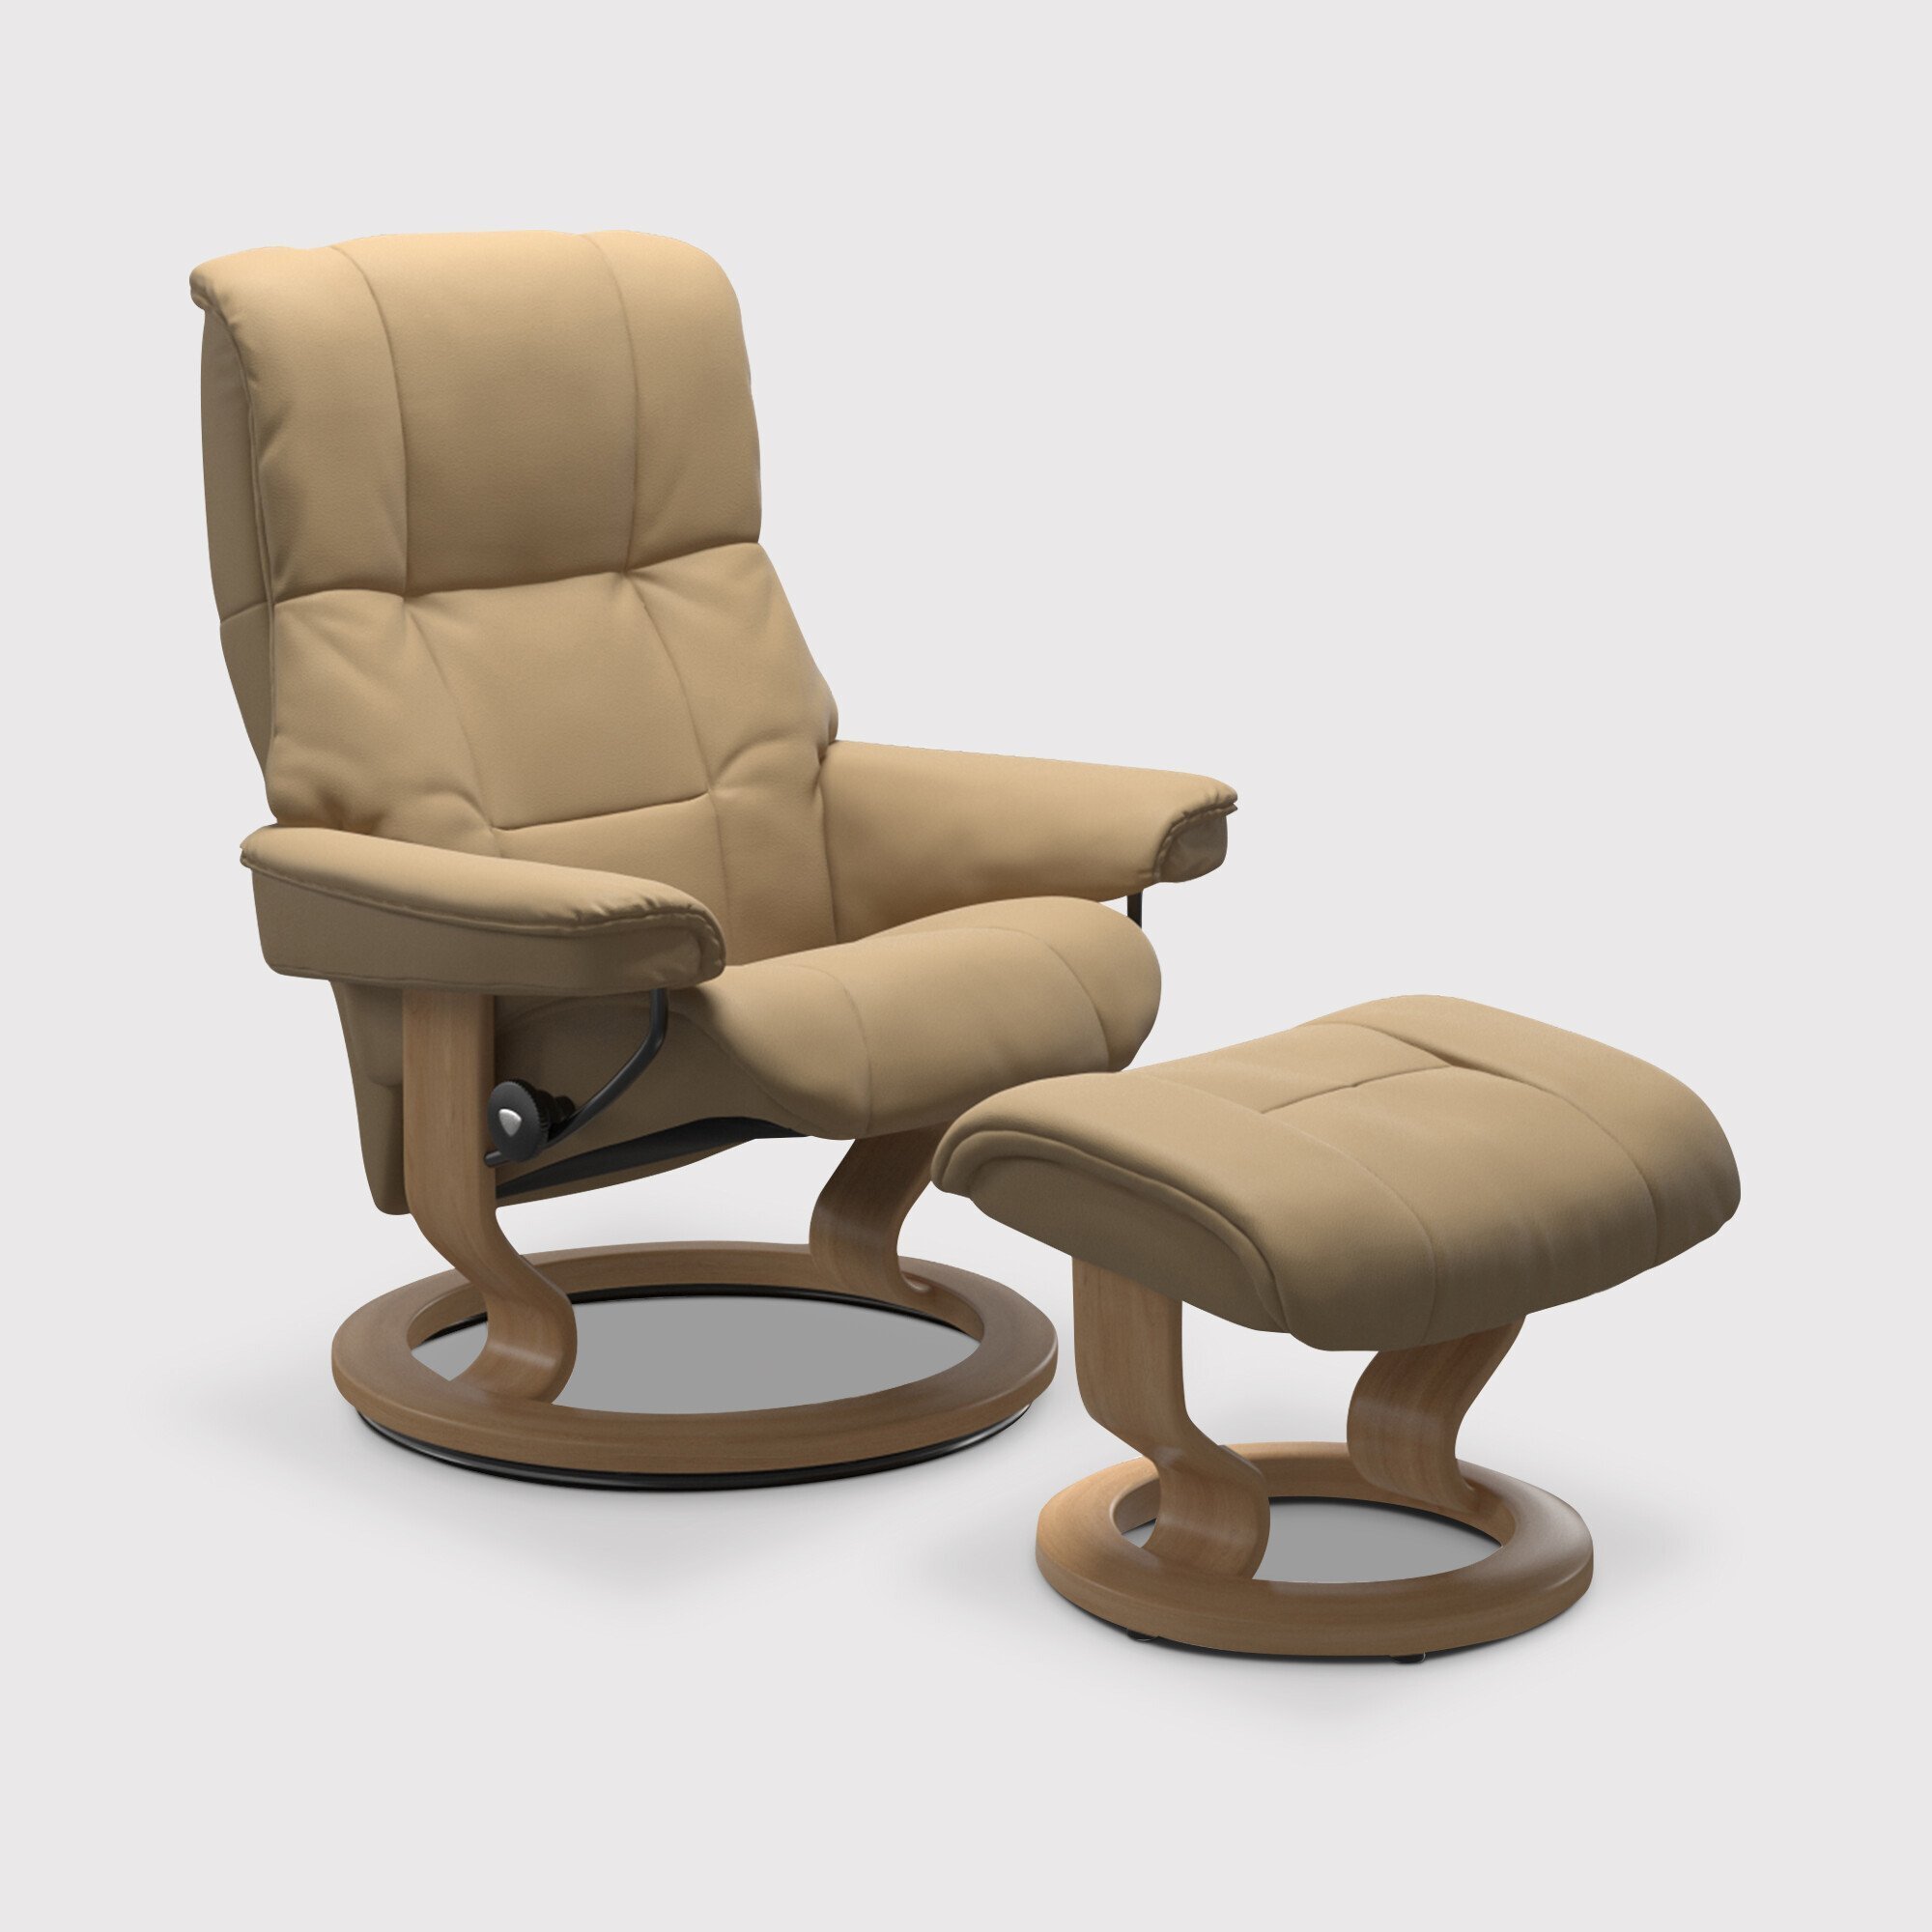 Stressless Mayfair Medium Recliner Chair & Stool Quickship, Neutral Leather - Barker & Stonehouse - image 1